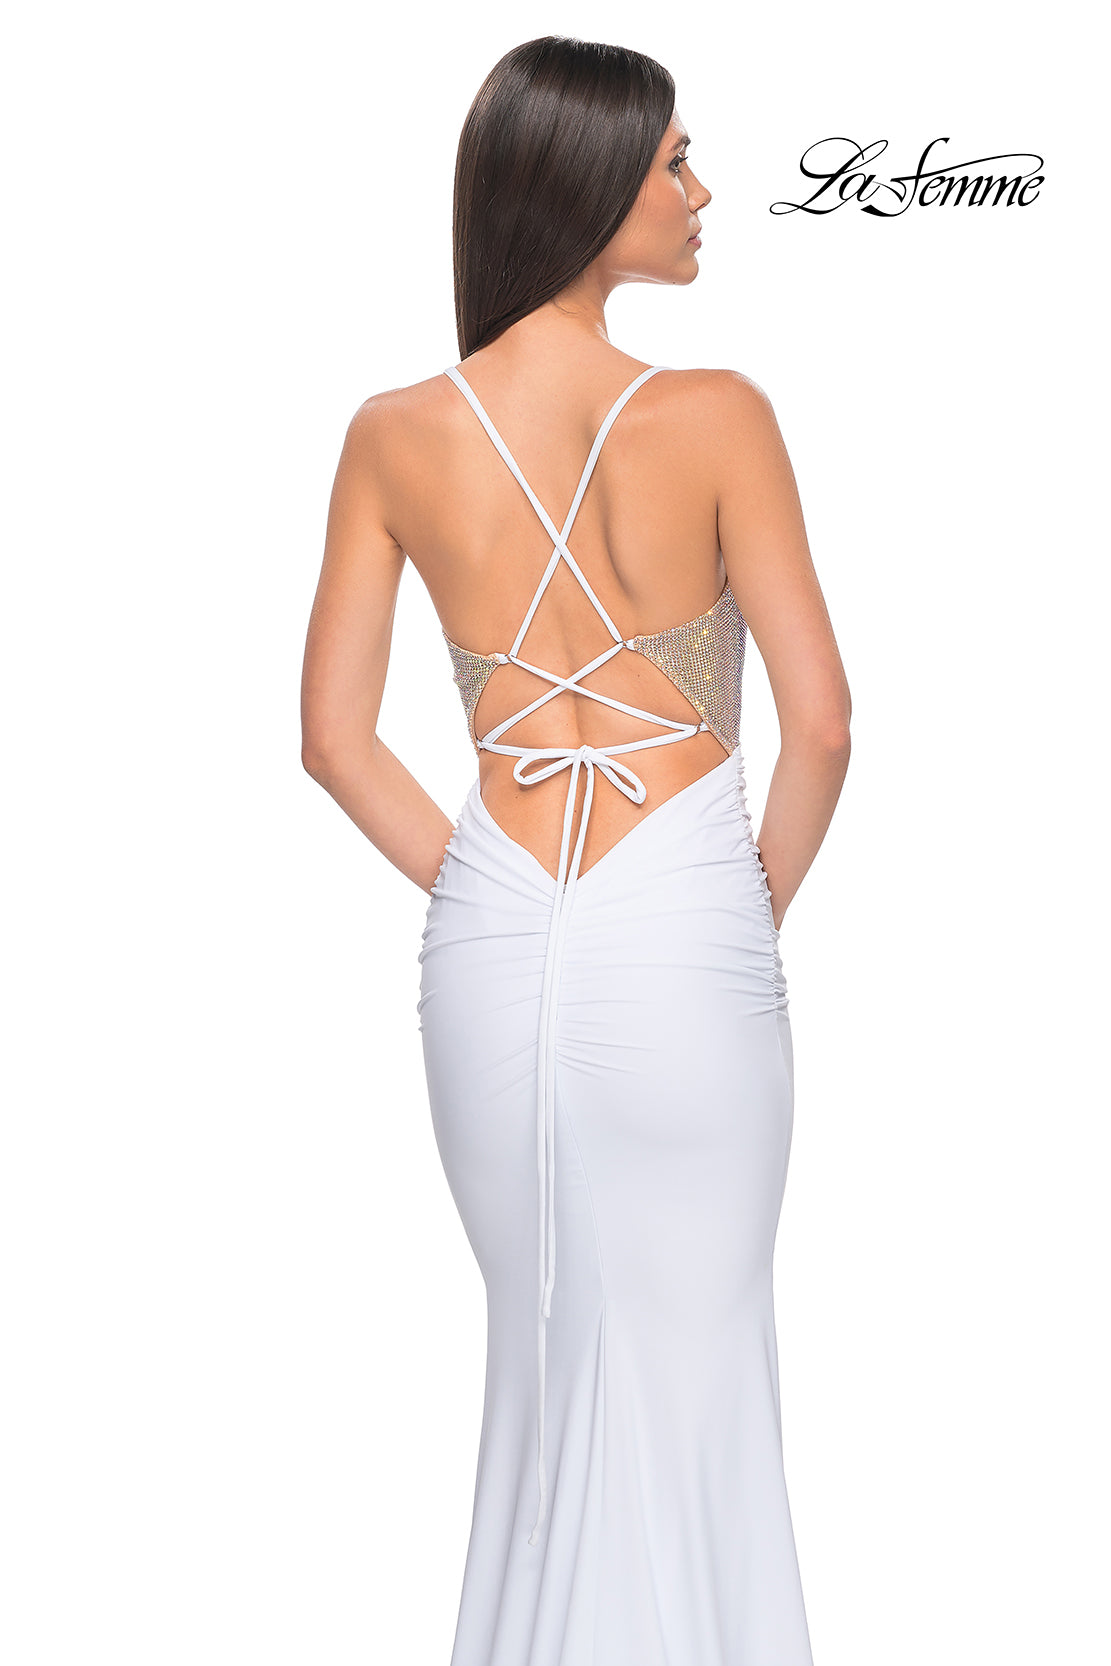 La-Femme-32260-V-Neck-Neckline-Criss-Cross-Back-Hot-Stone-Jersey-Fitted-White-Evening-Dress-B-Chic-Fashions-Prom-Dress